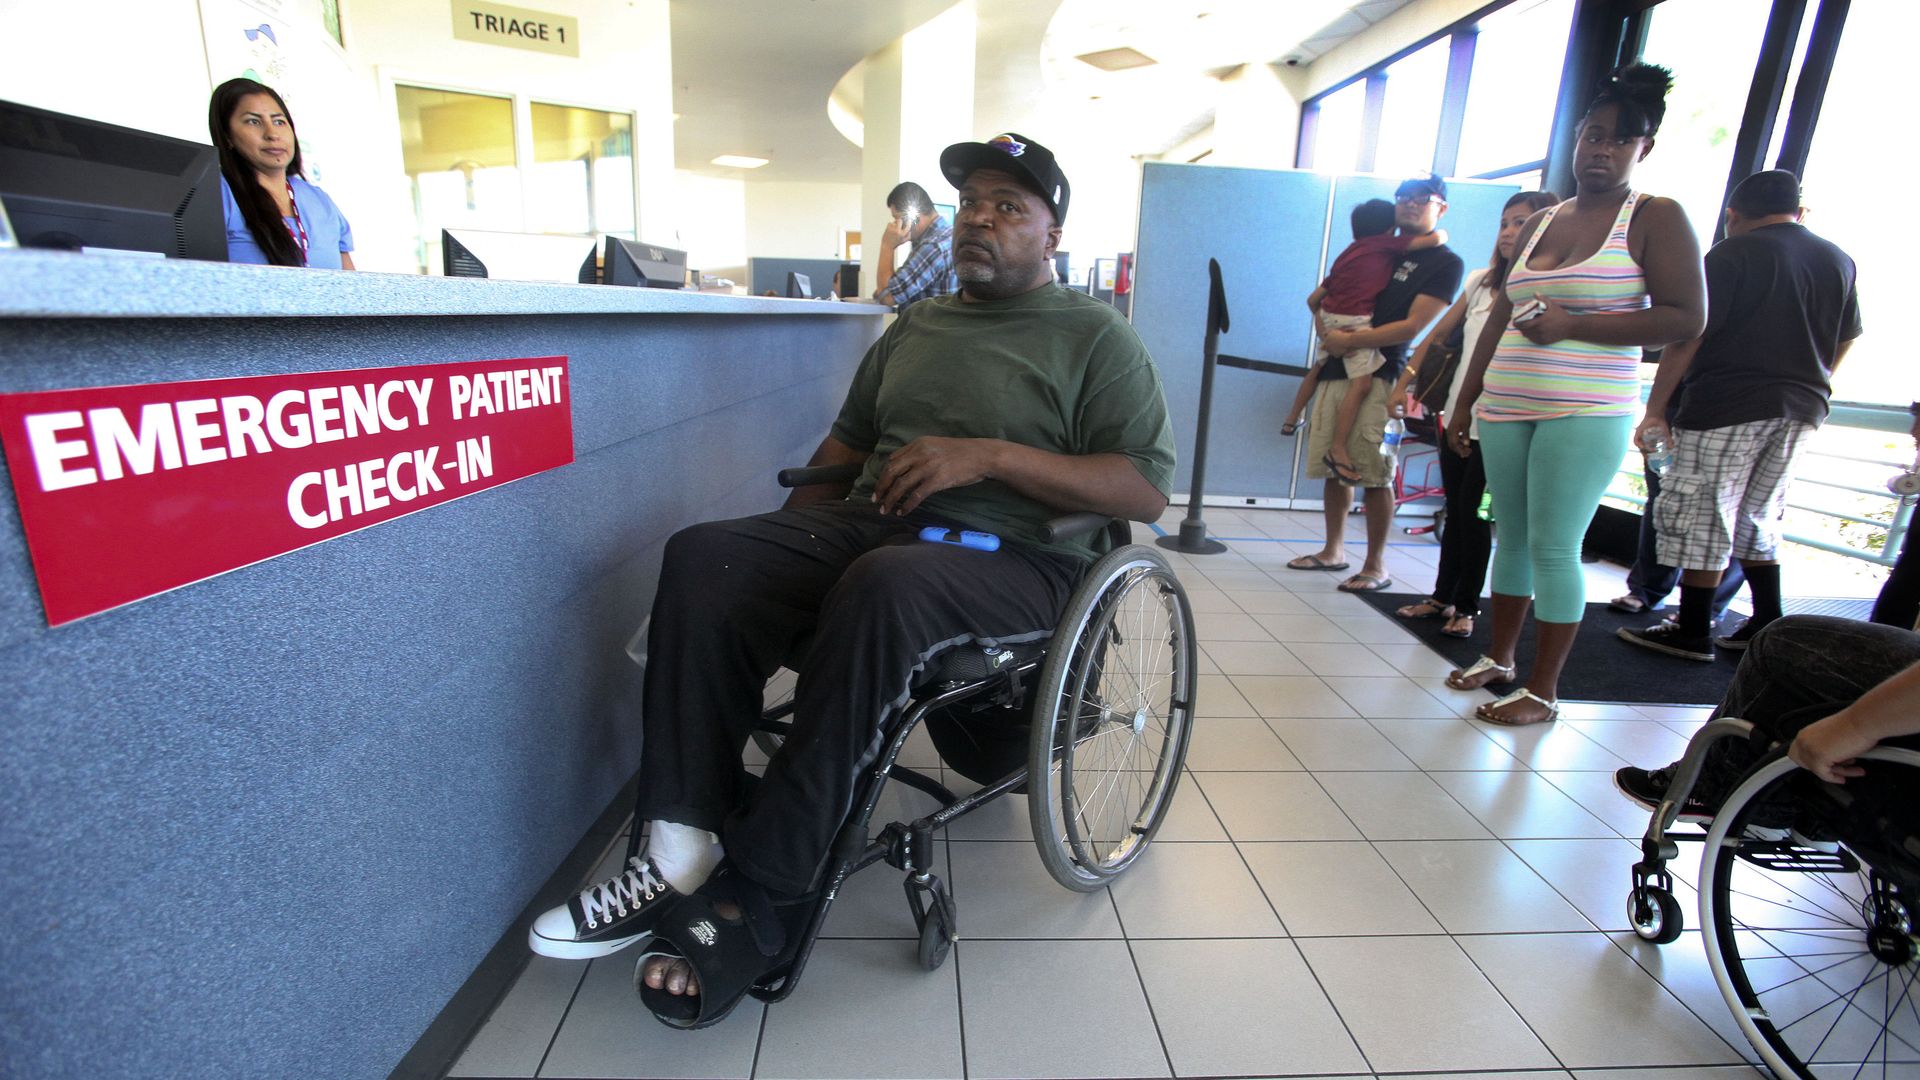 A man in a wheelchair checks in a hospital emergency room.